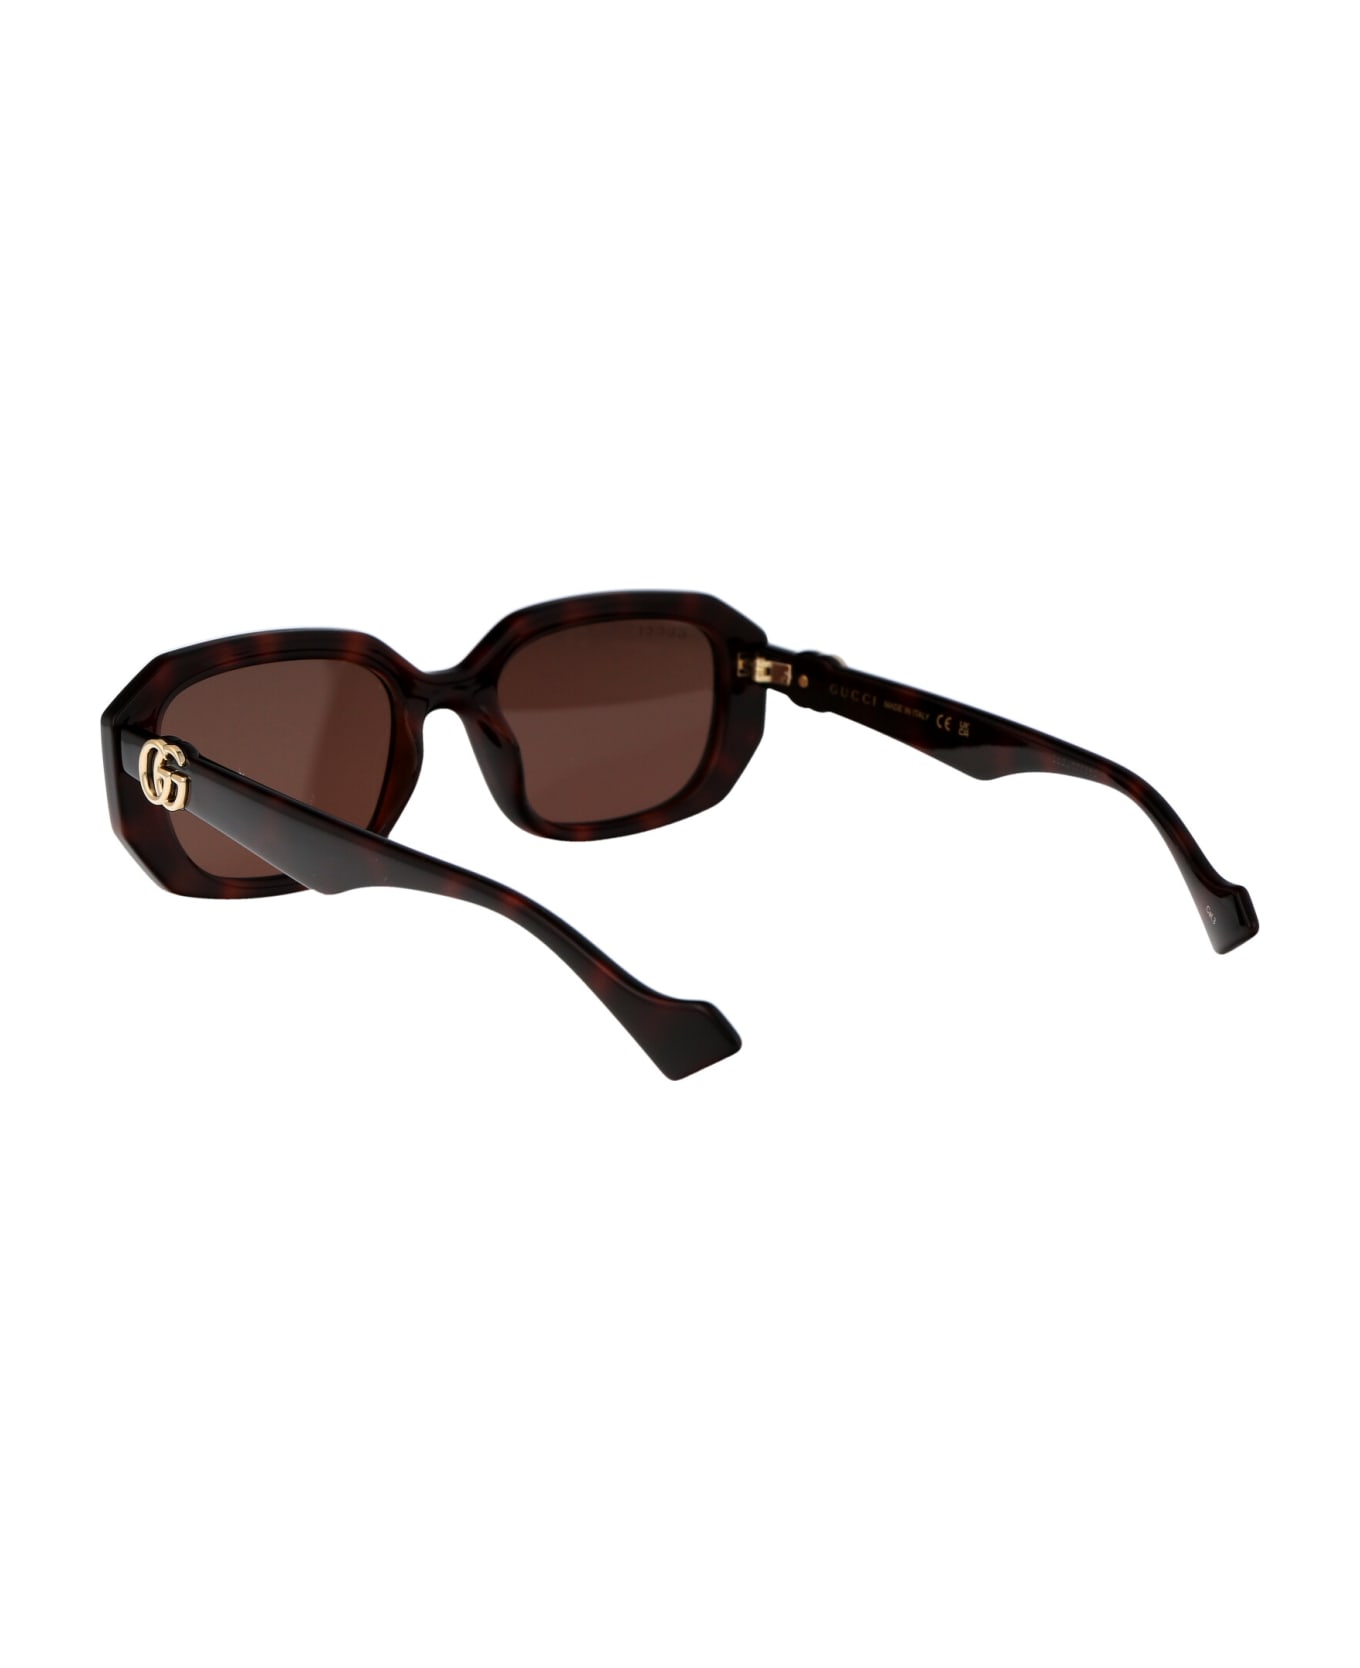 Gucci Eyewear Gg1535s Sunglasses - 002 HAVANA HAVANA BROWN